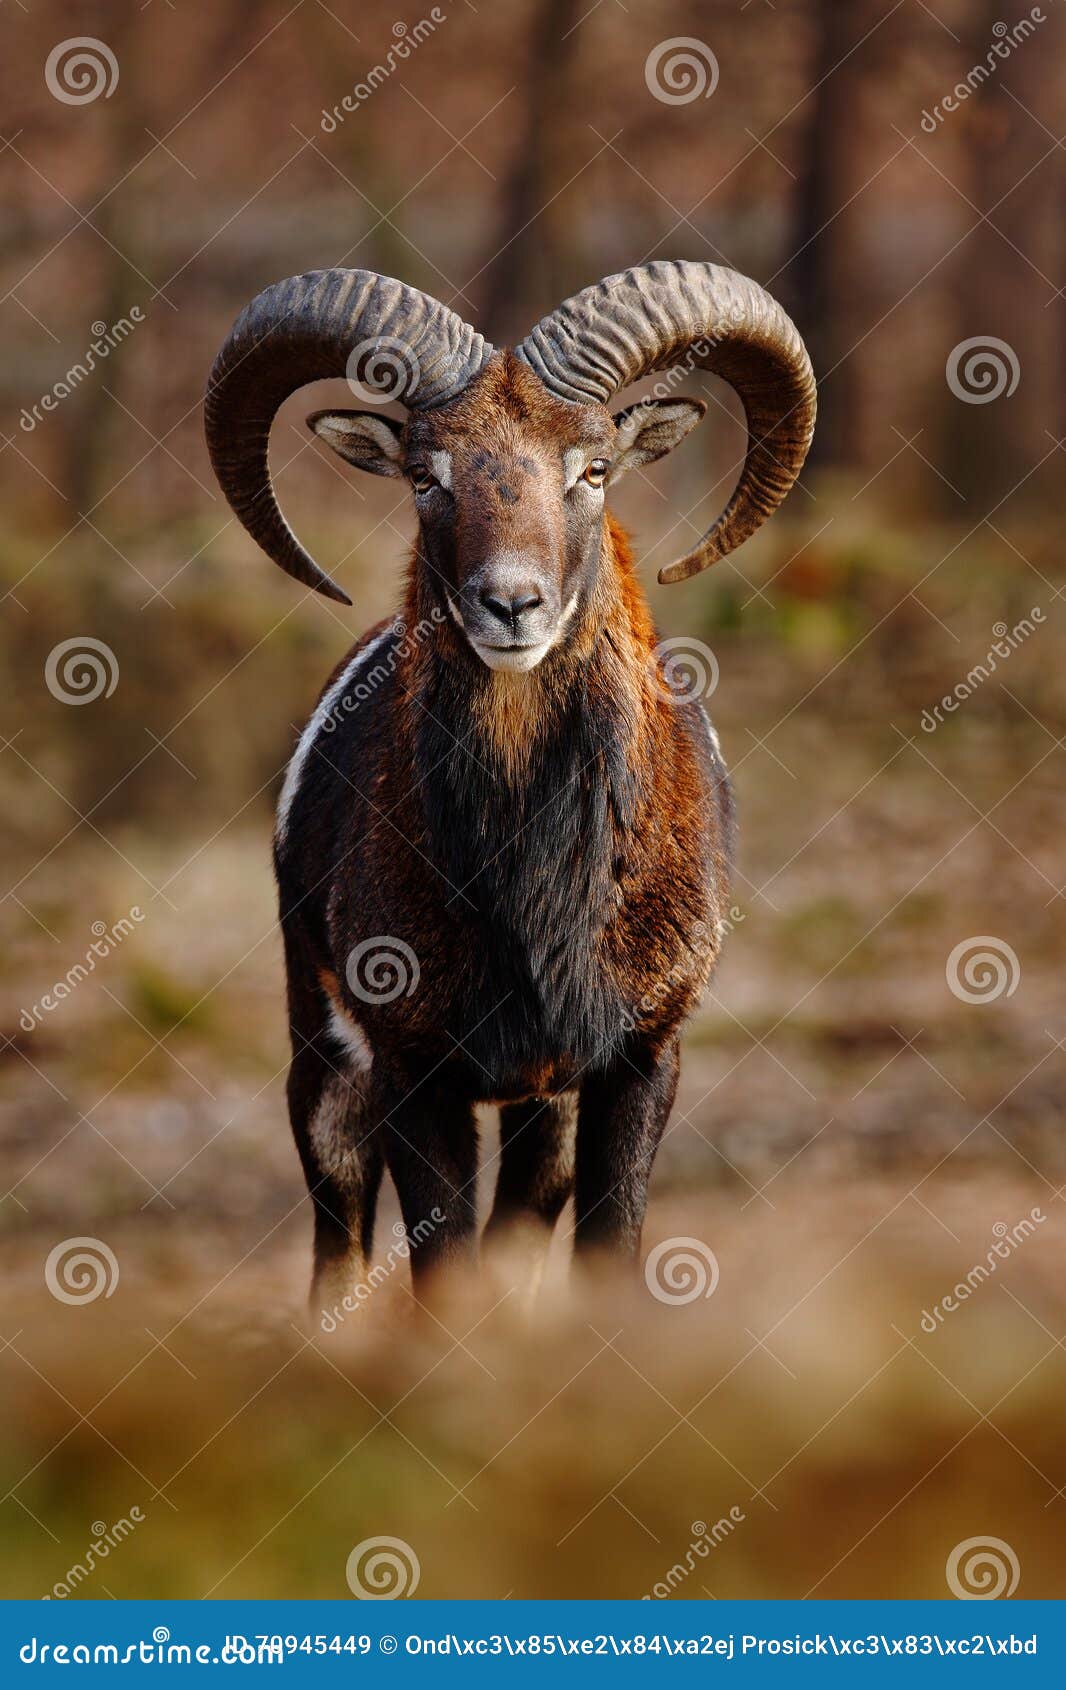 mouflon, ovis orientalis, forest horned animal in the nature habitat, portrait of mammal with big horn, praha, czech republic